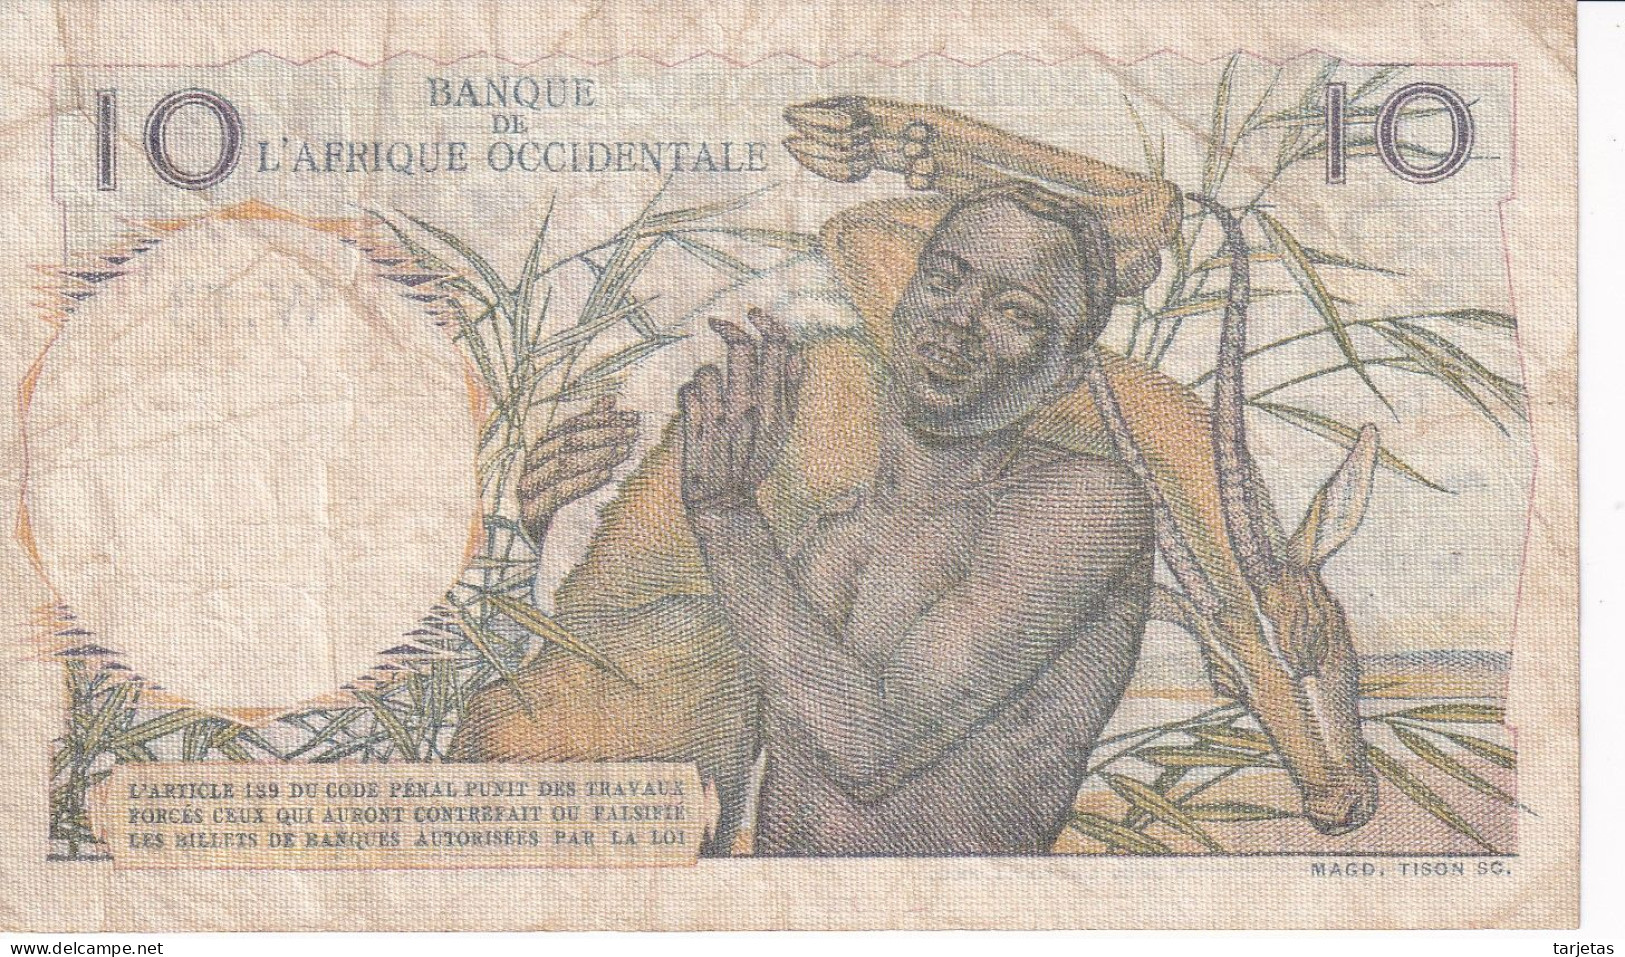 BILLETE DE AFRIQUE OCCIDENTALE DE 10 FRANCS DEL AÑO 1949 (BANKNOTE) - Stati Dell'Africa Occidentale